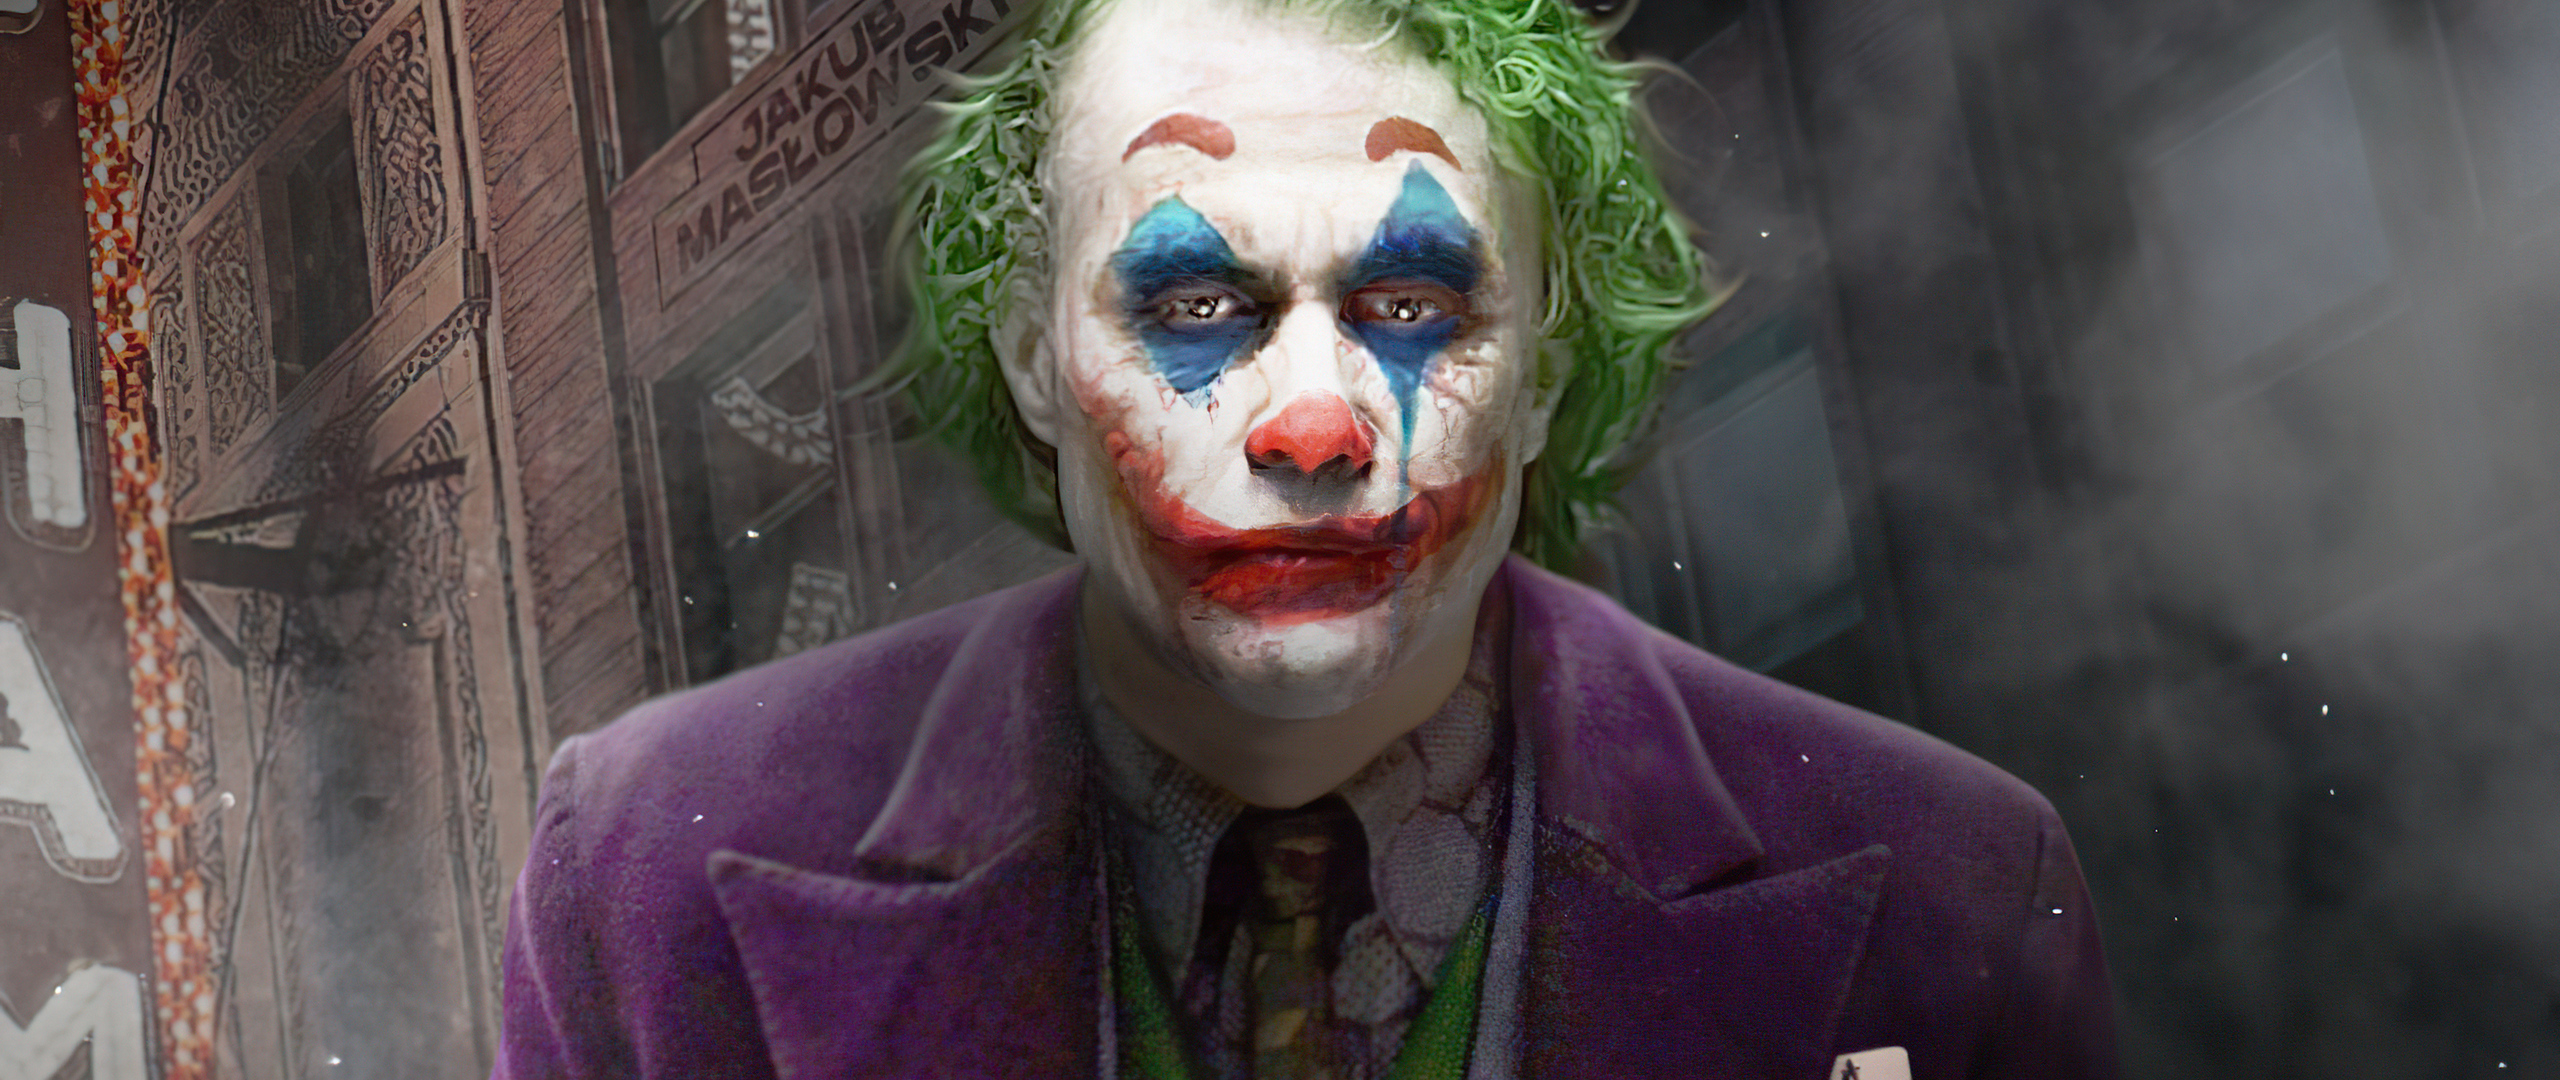 2560x1080 The Joker Heath Ledger And Joaquin Phoenix 2560x1080 ...